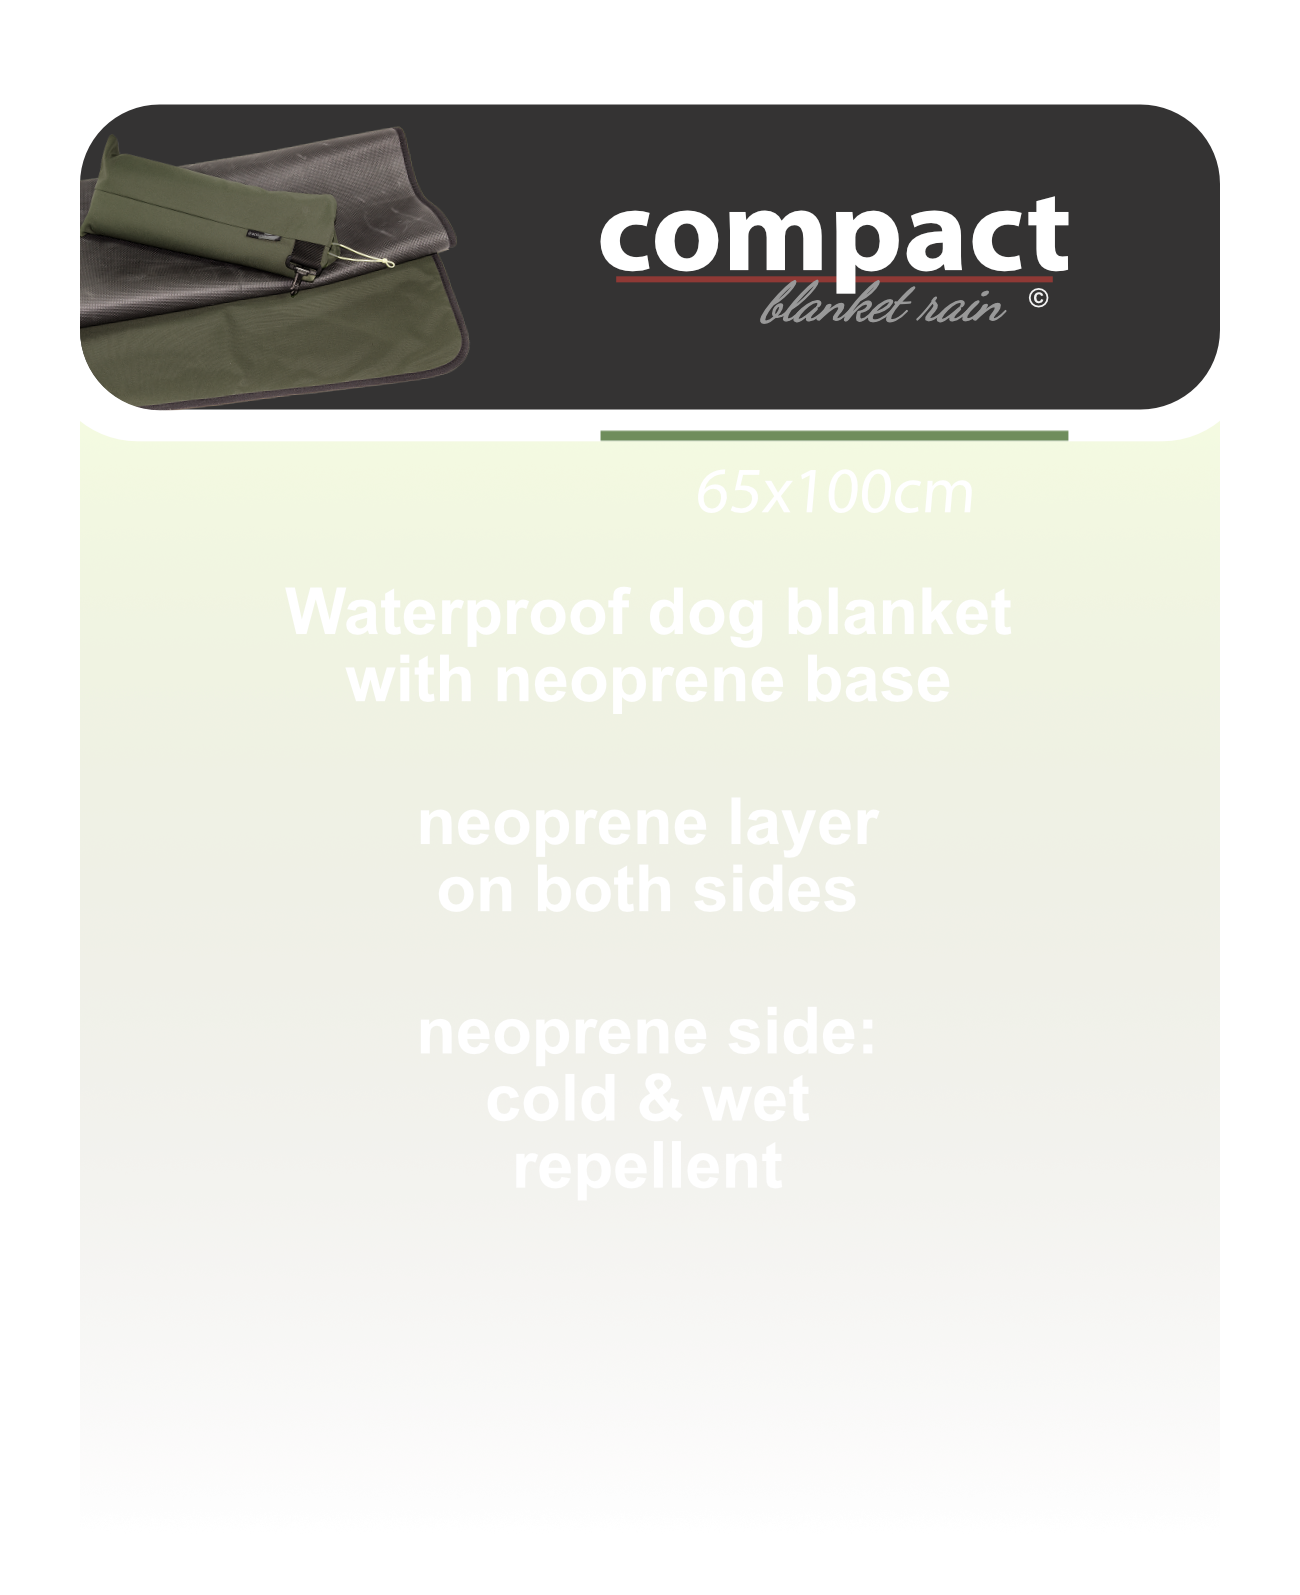 banner-compact blanket rain-english